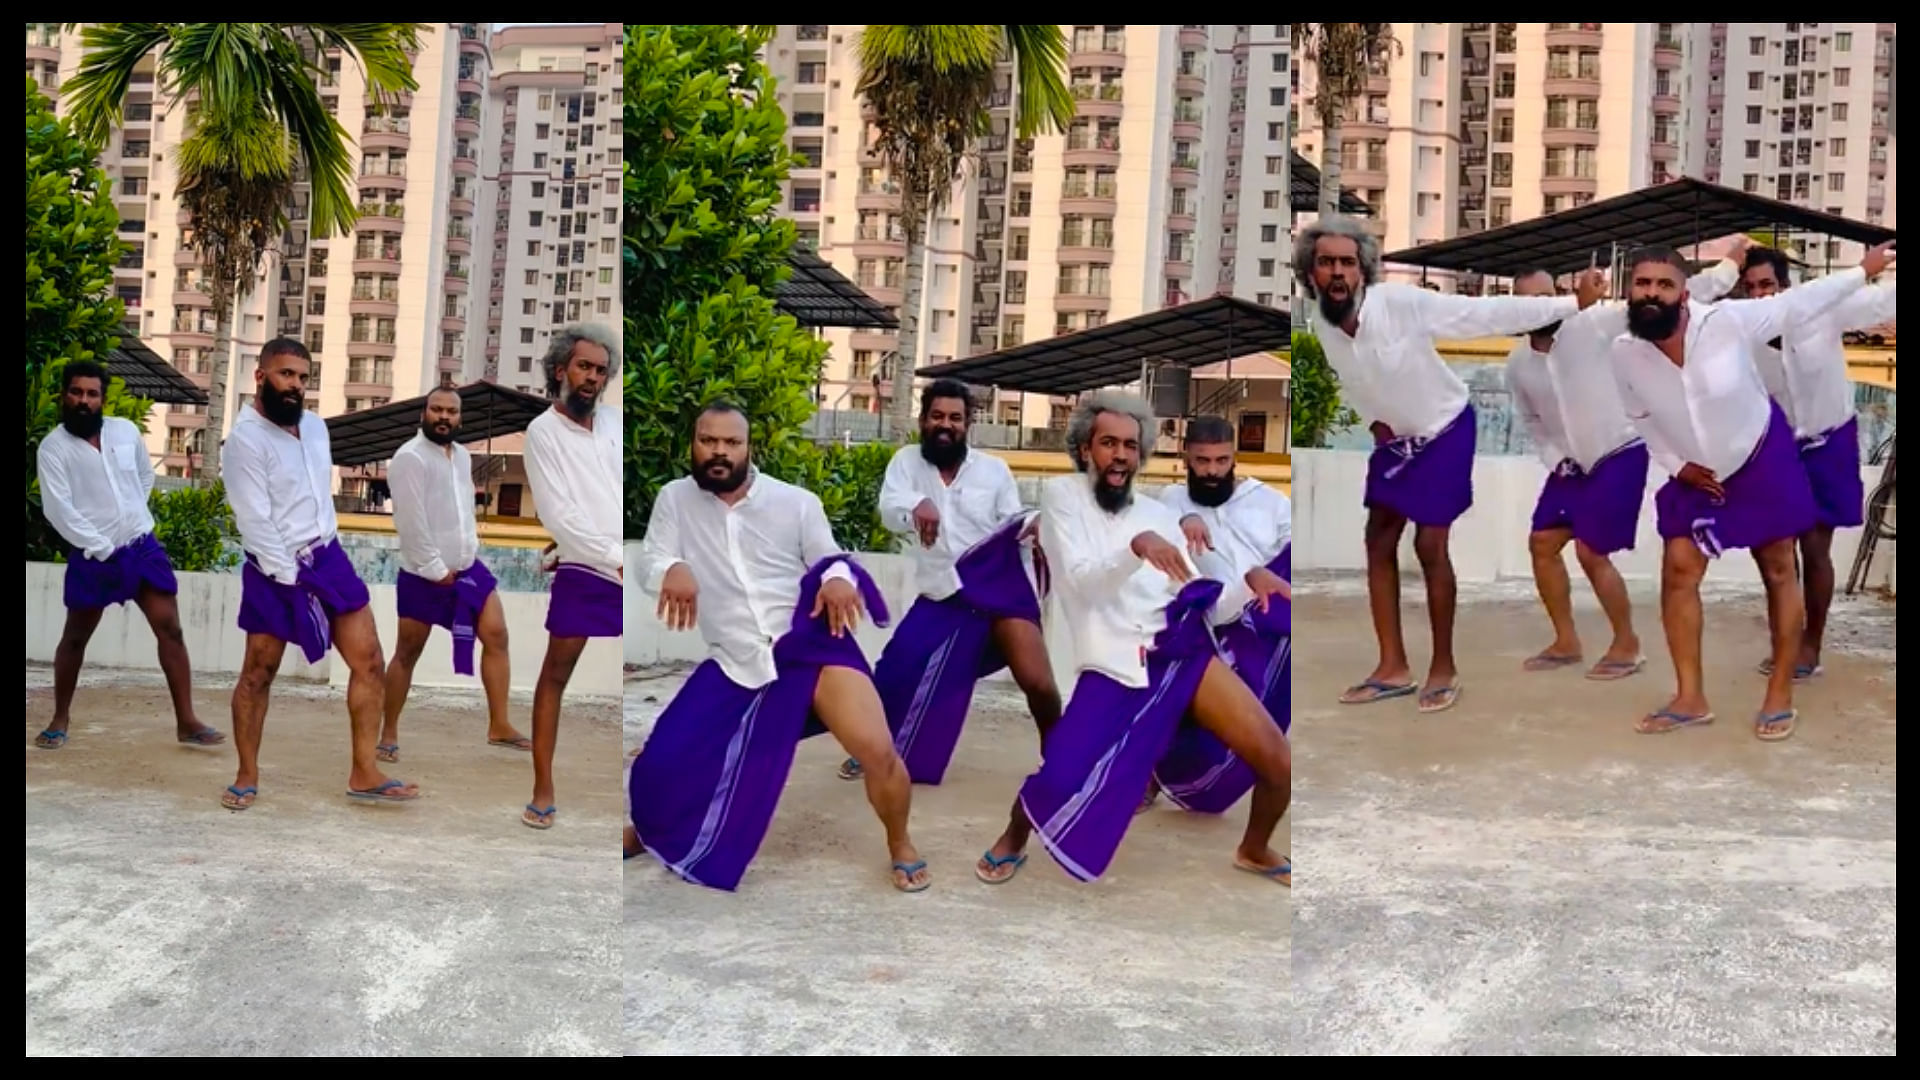 Kerala boys lungi dance on michael jackson song video goes viral om social media